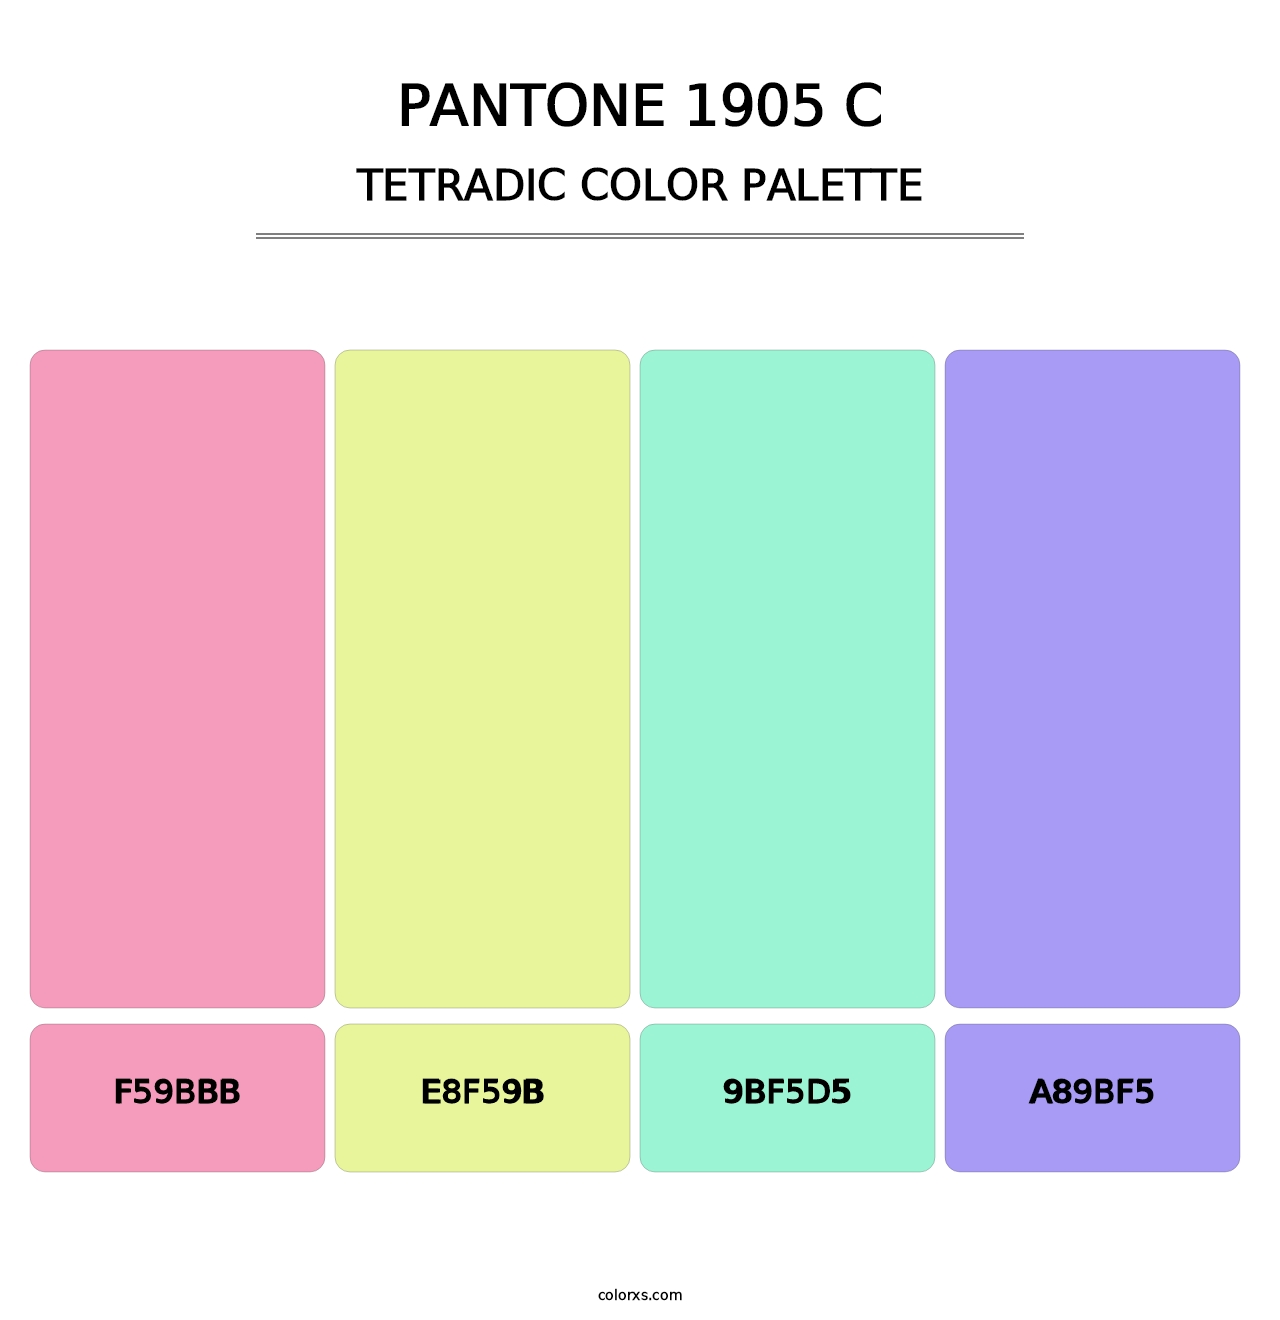 PANTONE 1905 C - Tetradic Color Palette